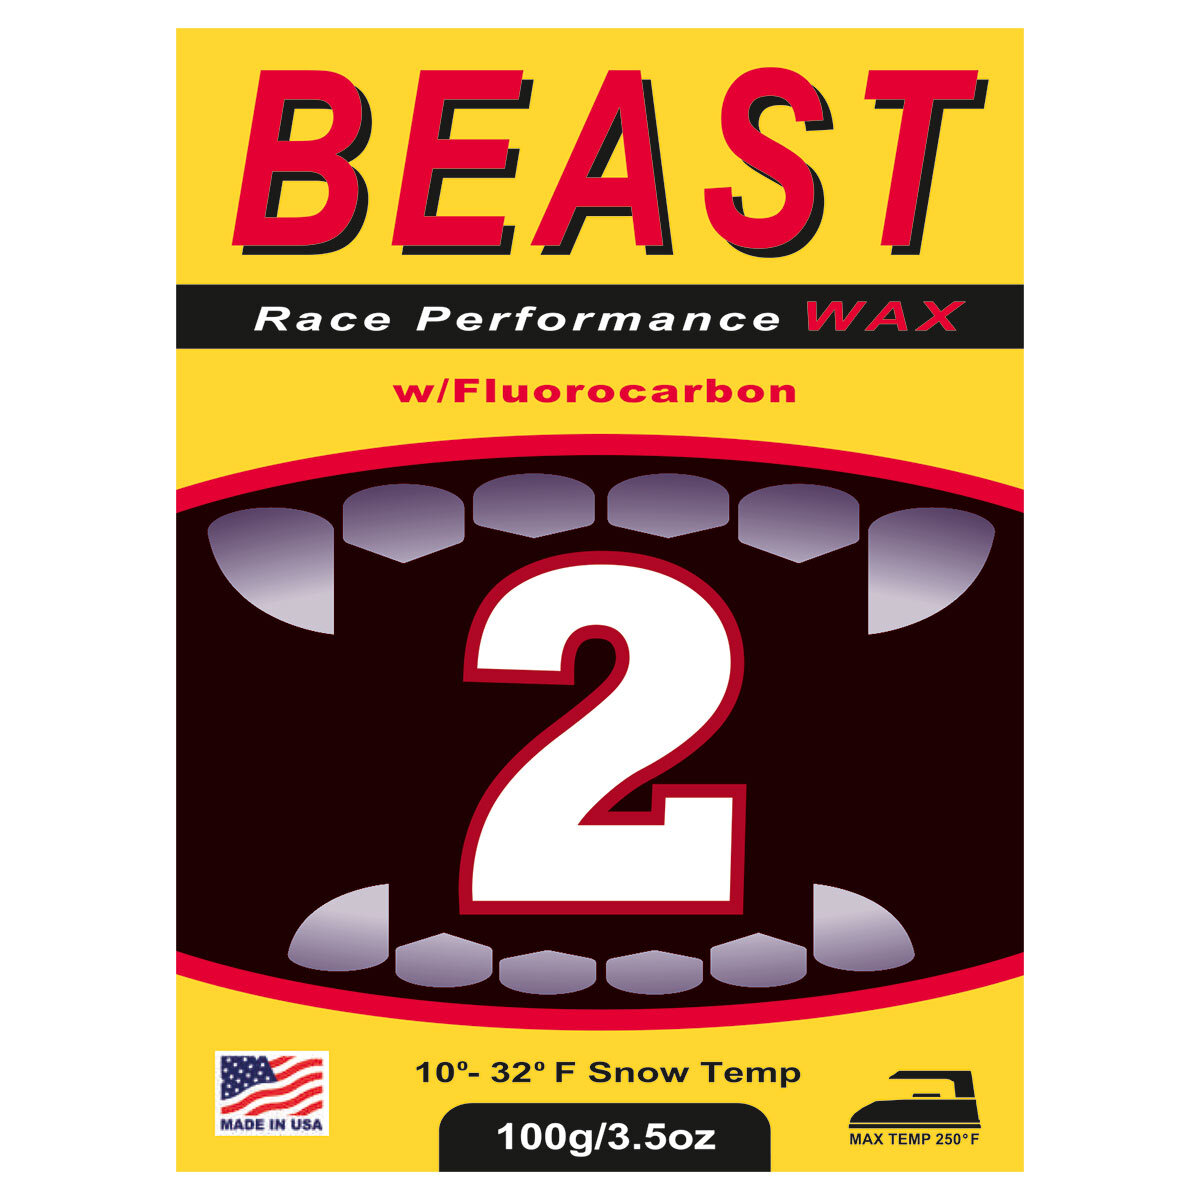 BEAST 2 Race Wax